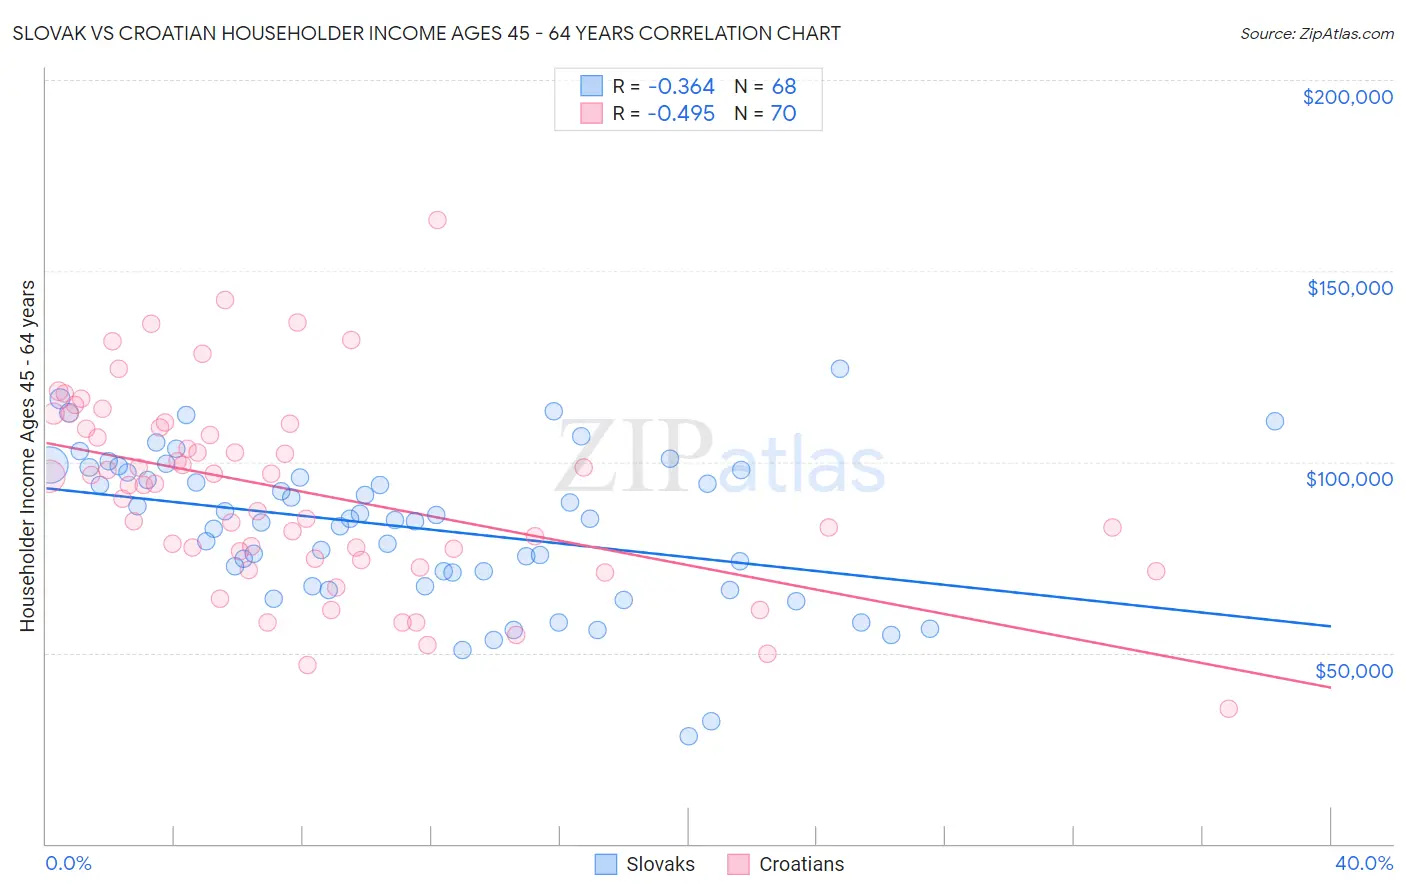 Slovak vs Croatian Householder Income Ages 45 - 64 years